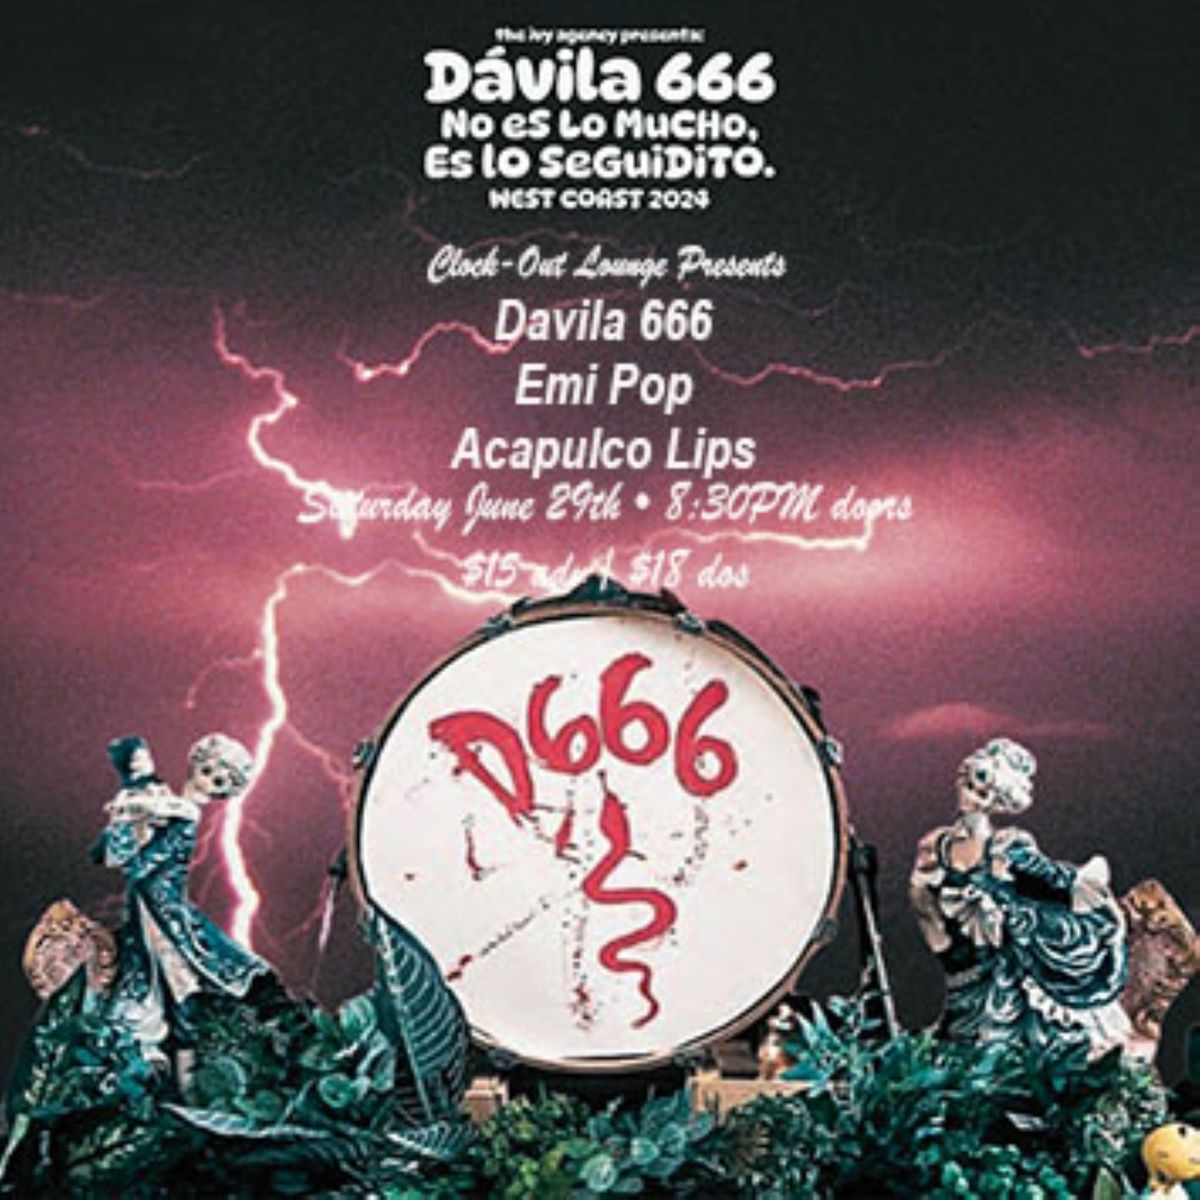 Clock-Out Lounge Presents: Davila 666 w\/ Emi Pop, Acapulco Lips